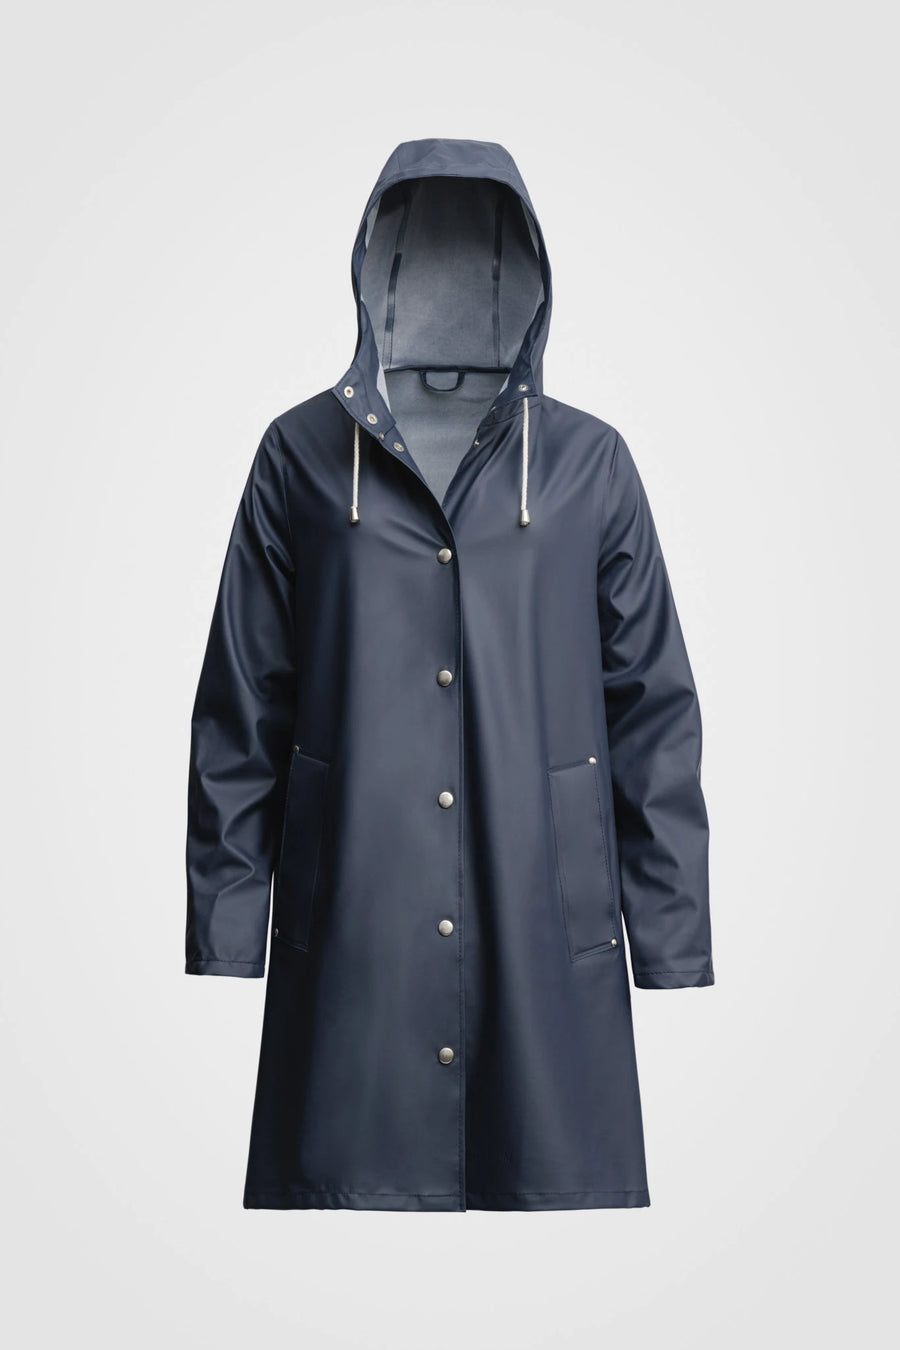 STUTTERHEIM Lightweight Moseback Raincoat in Color: 